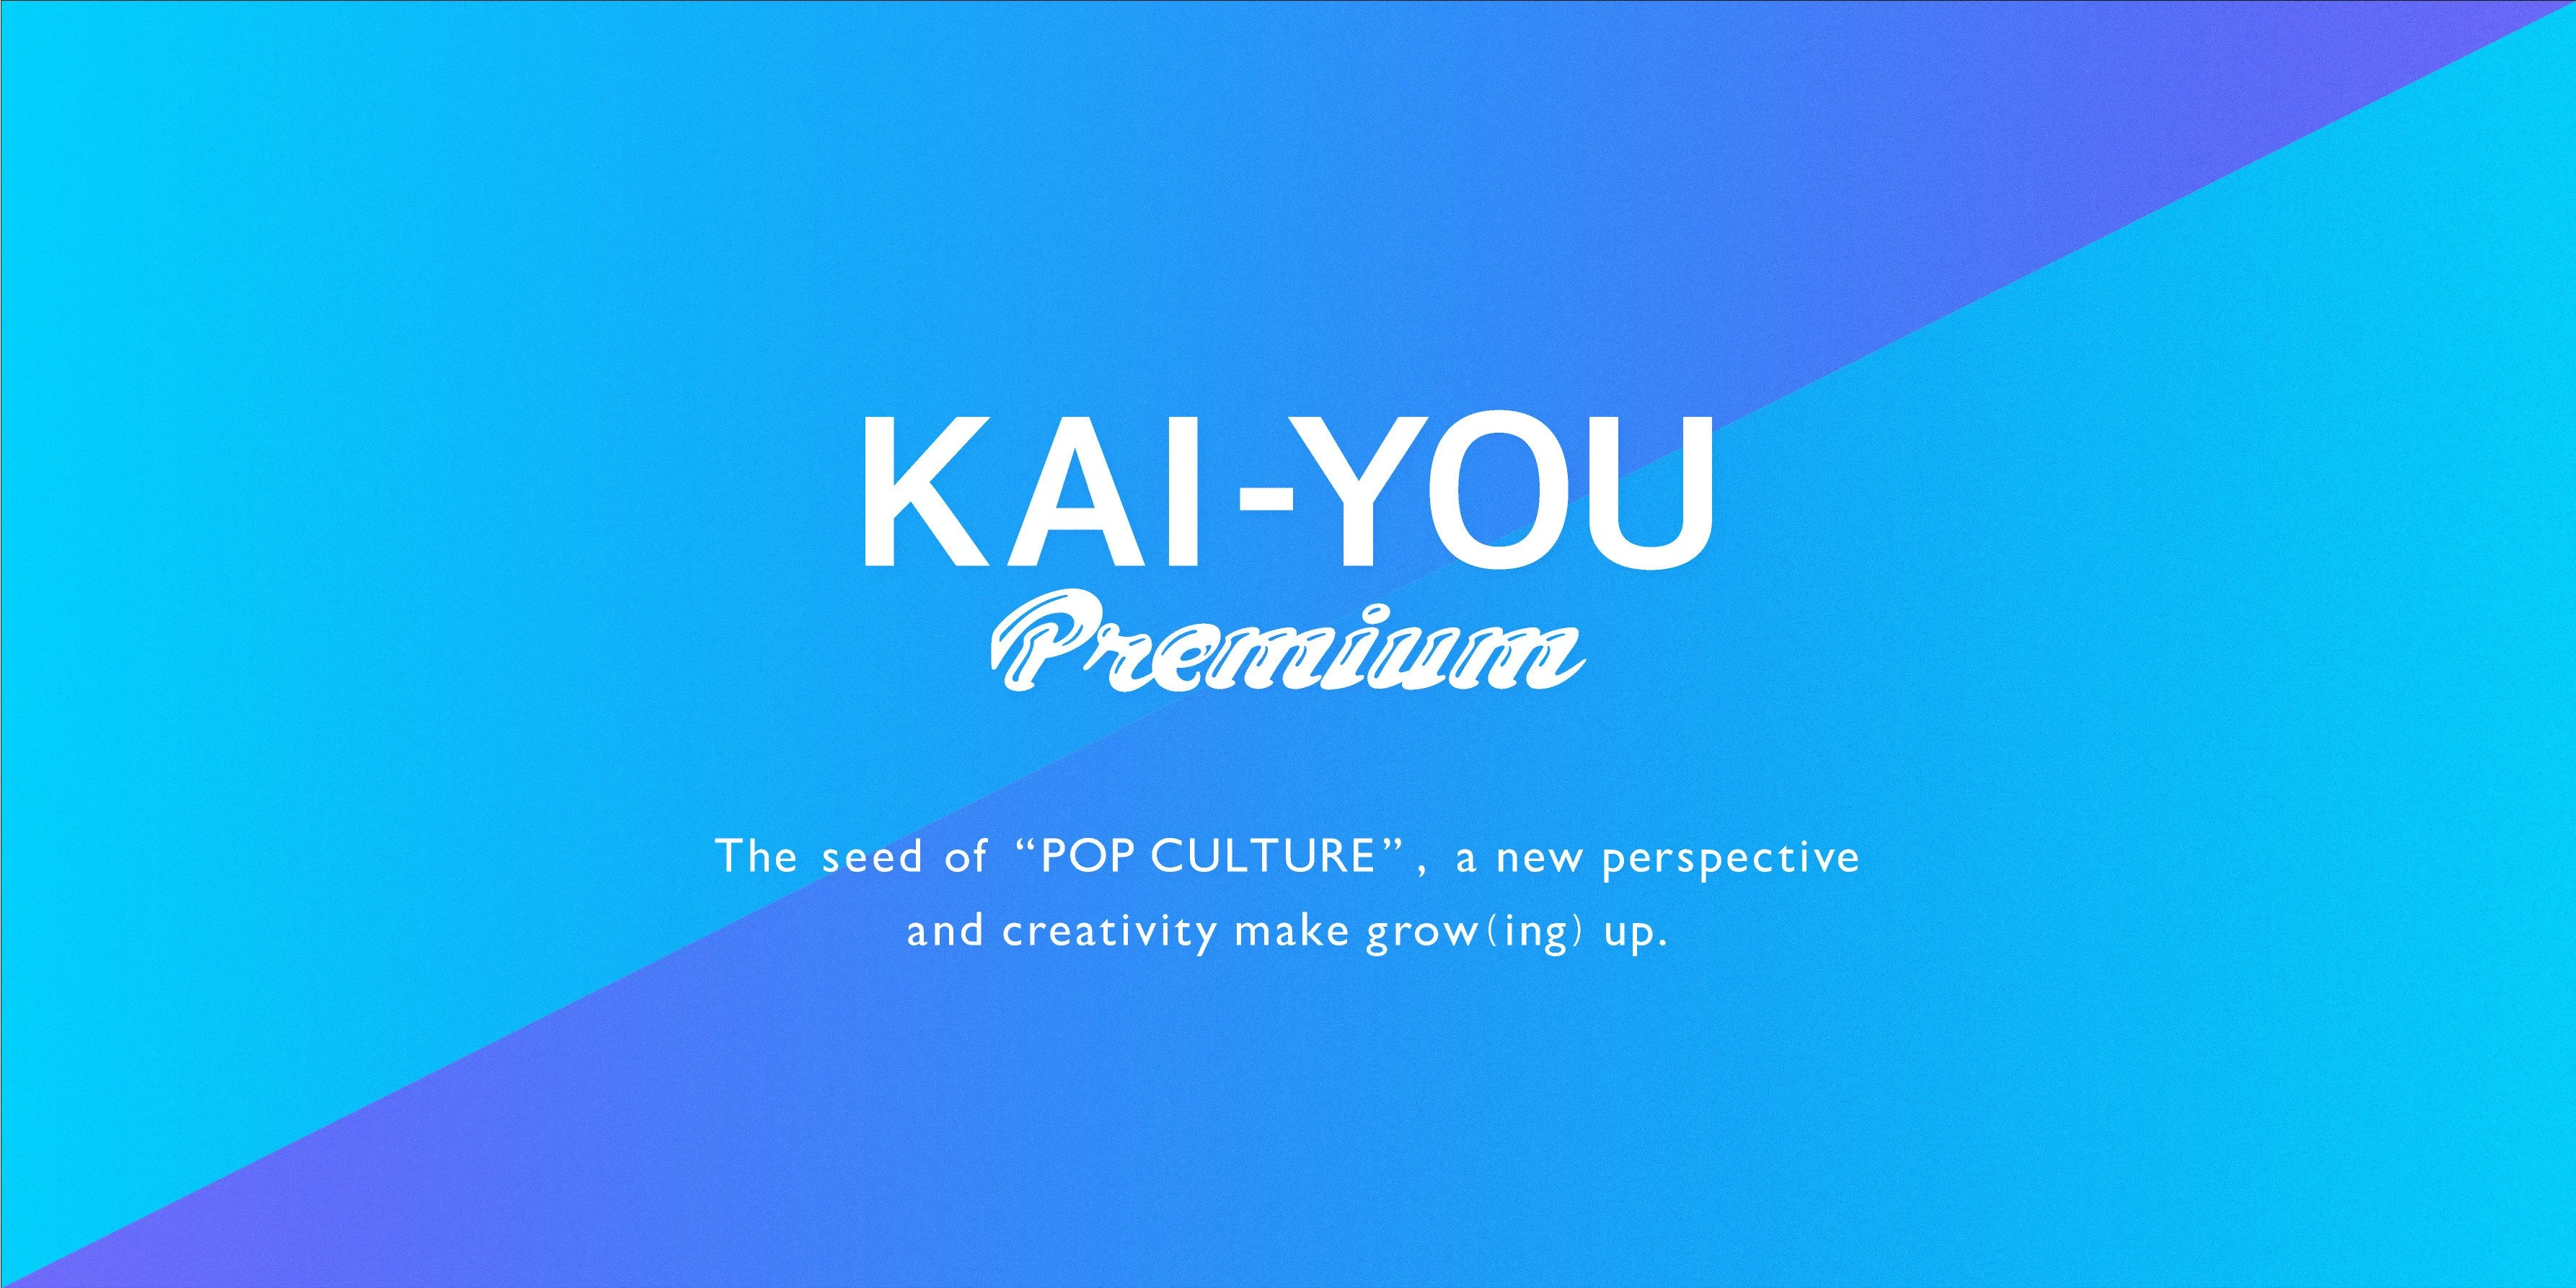 KAI-YOU Premiumの料金システムを一部改定いたしました